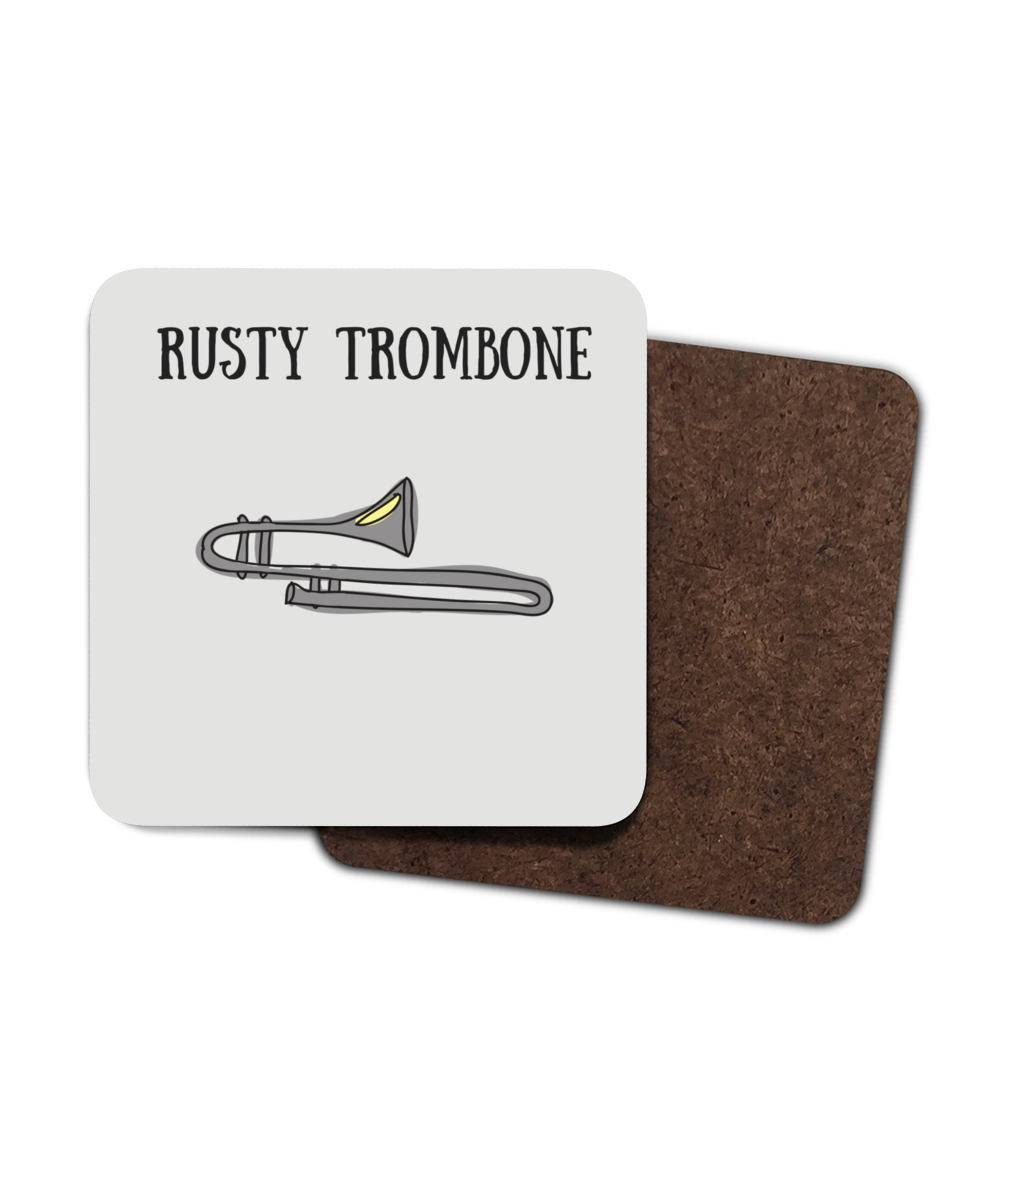 rusty trumpet urban dictionary